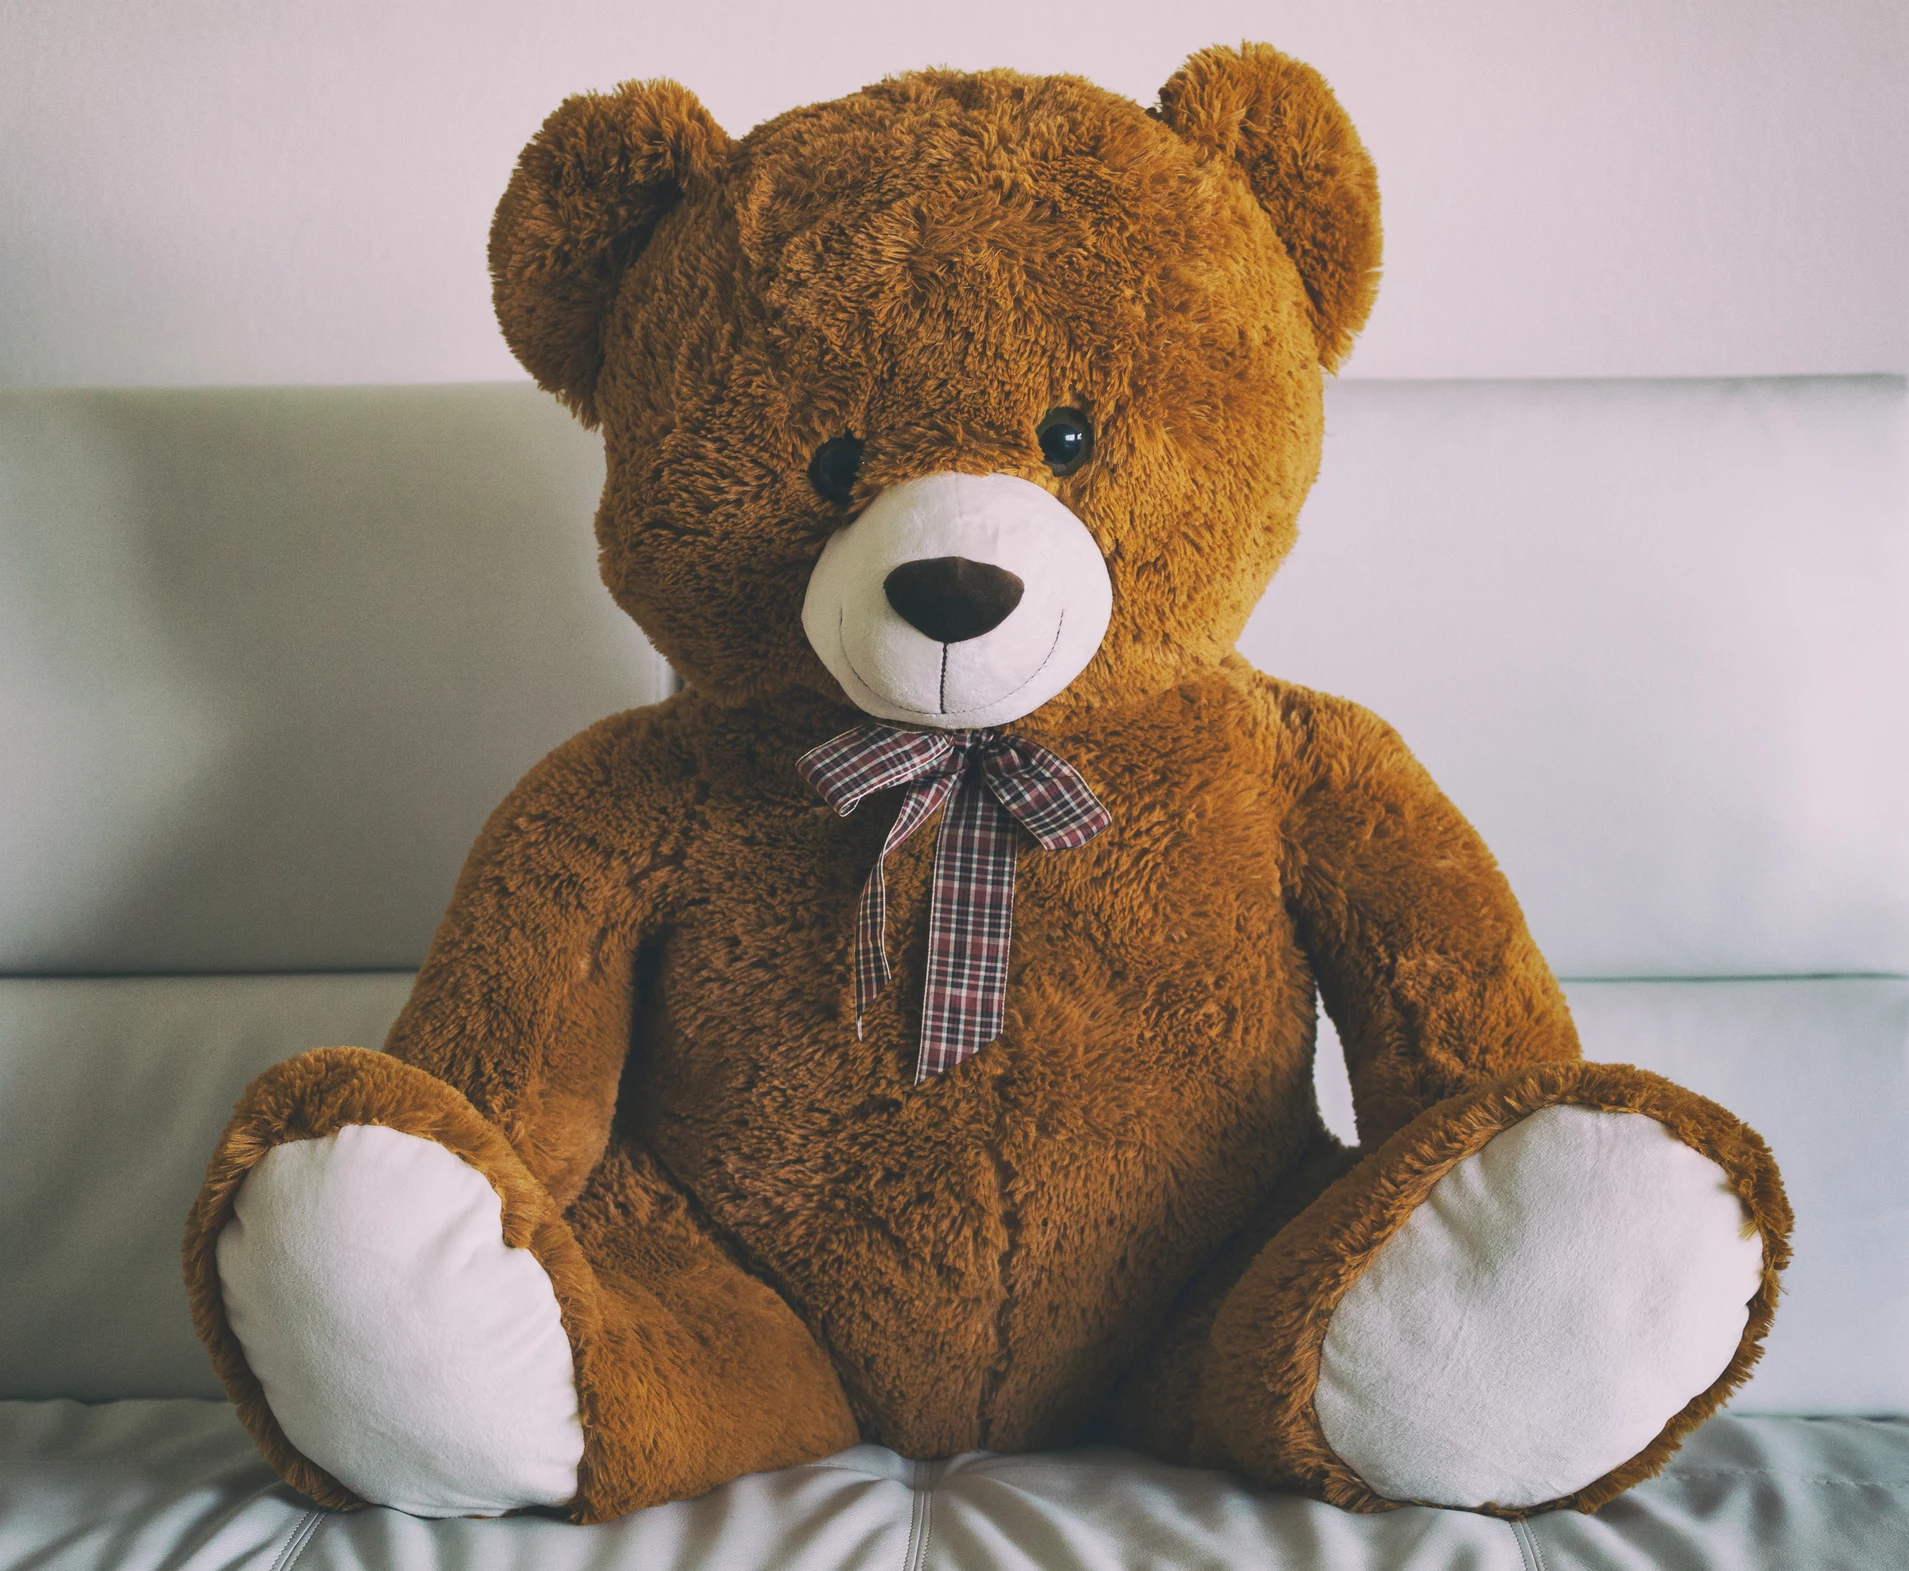 National Teddy Bear Day (September 9th)